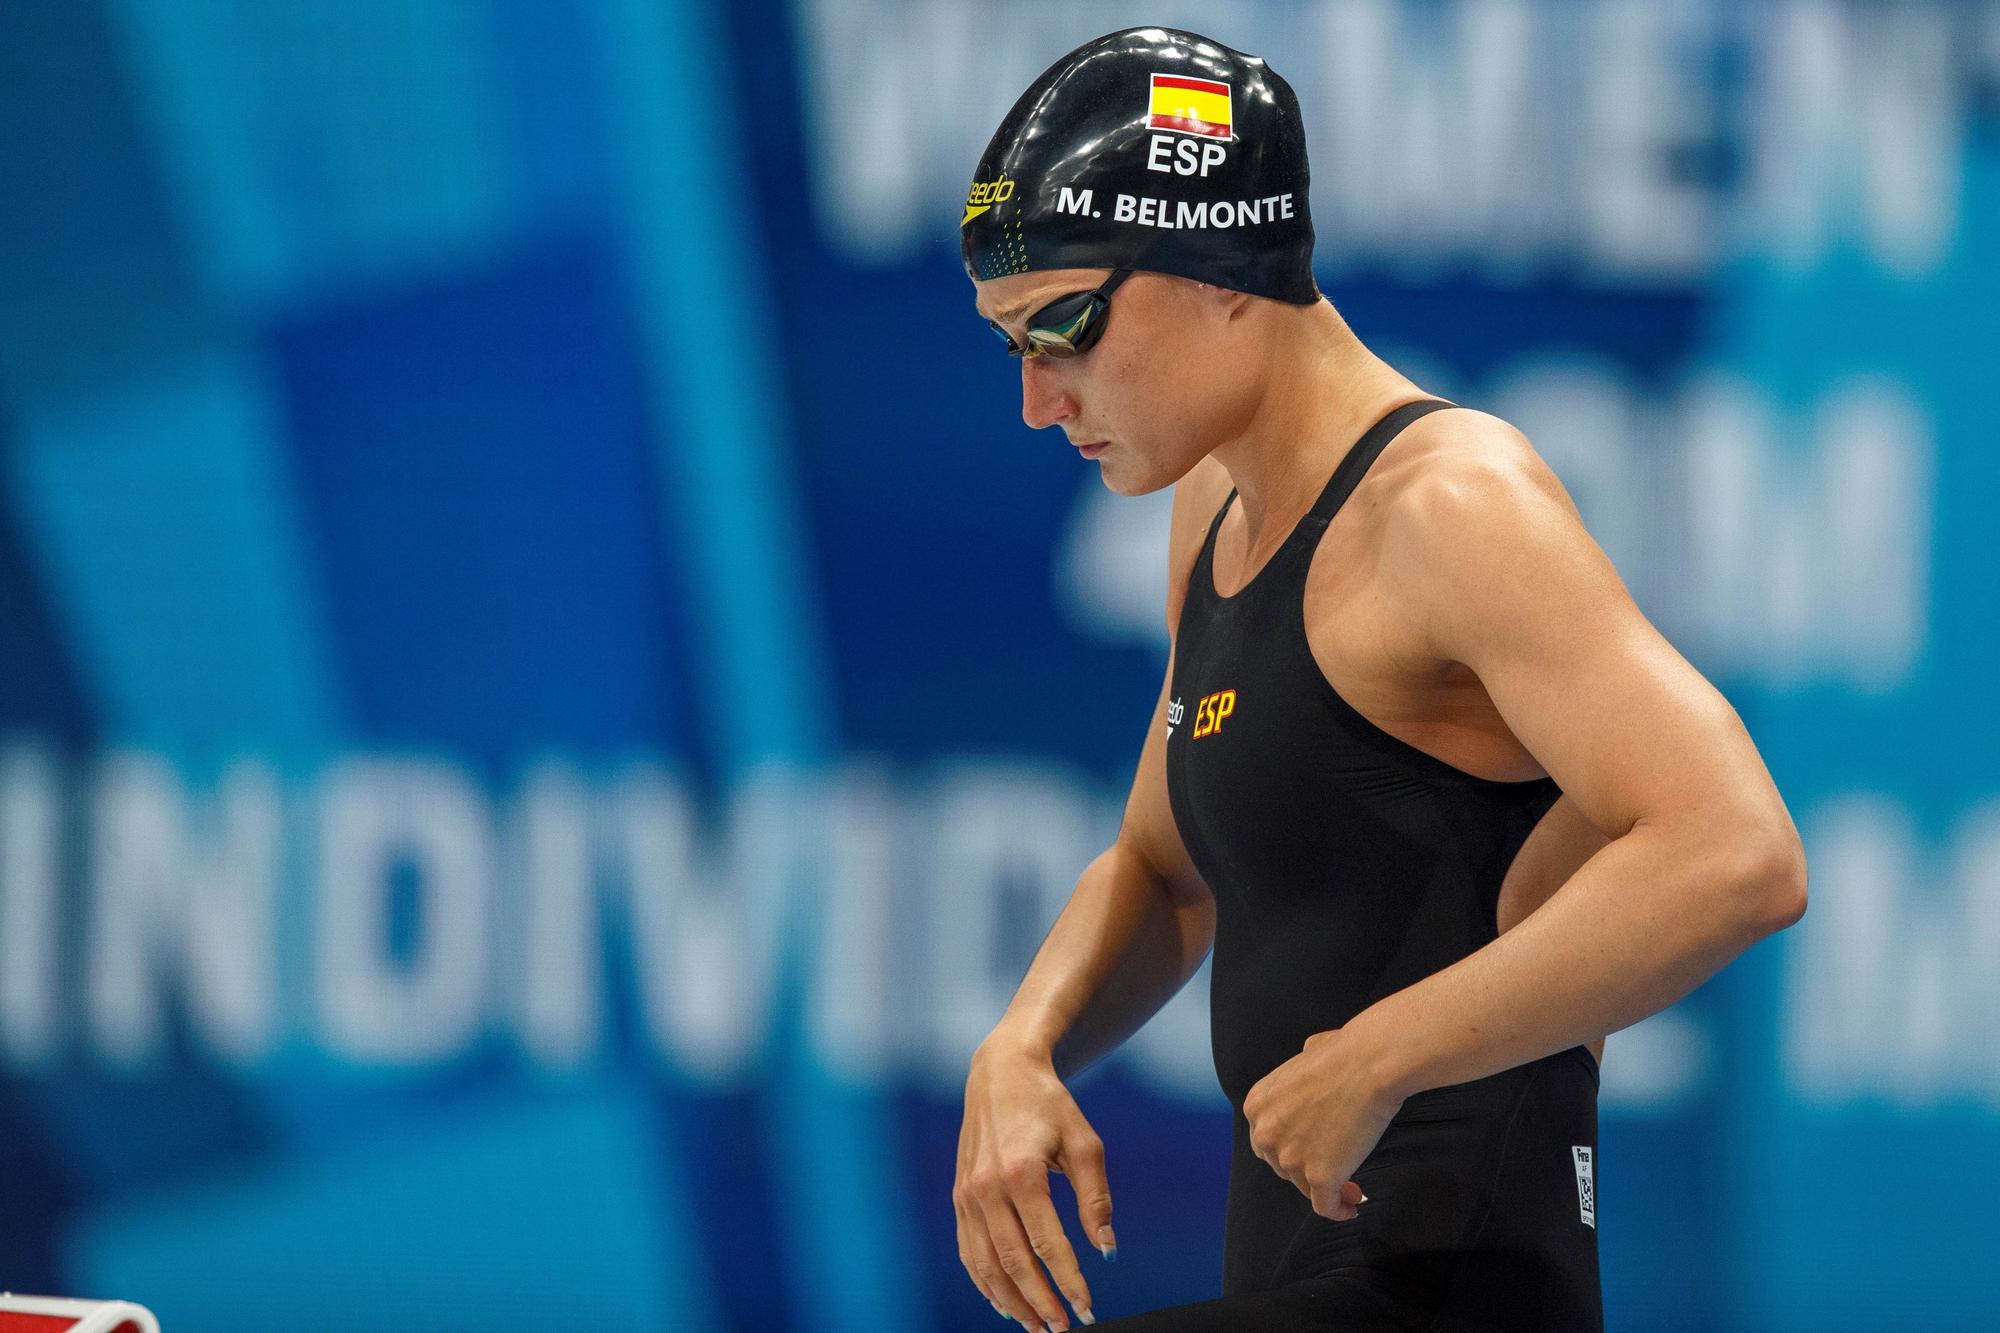 La nadadora española Mireia Belmonte se prepara antes de una prueba